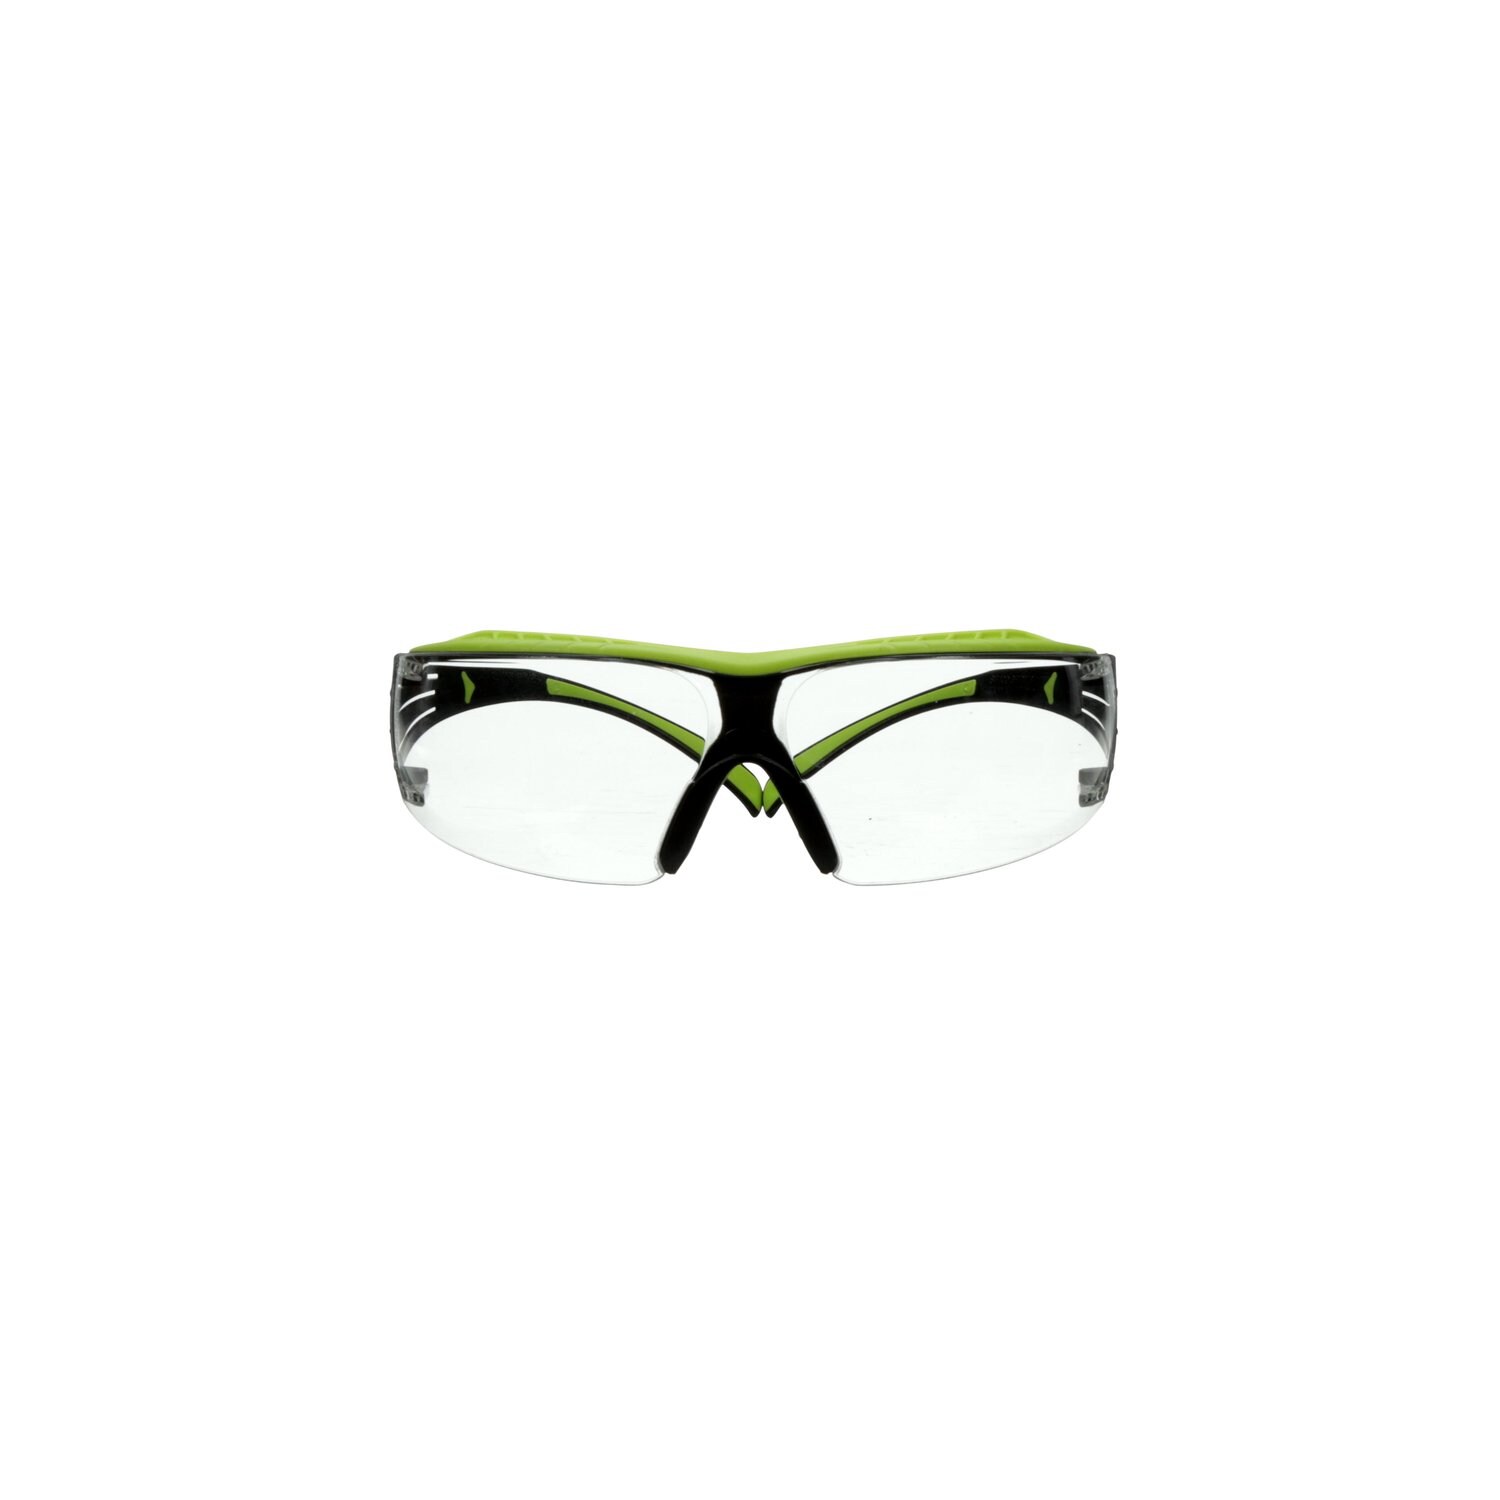 7100180045 - 3M SecureFit 400 Series Safety Glasses SF401XAF-GRN, Green/Black,
Clear Anti-Fog/Anti-Scratch Lens, 20 EA/Case